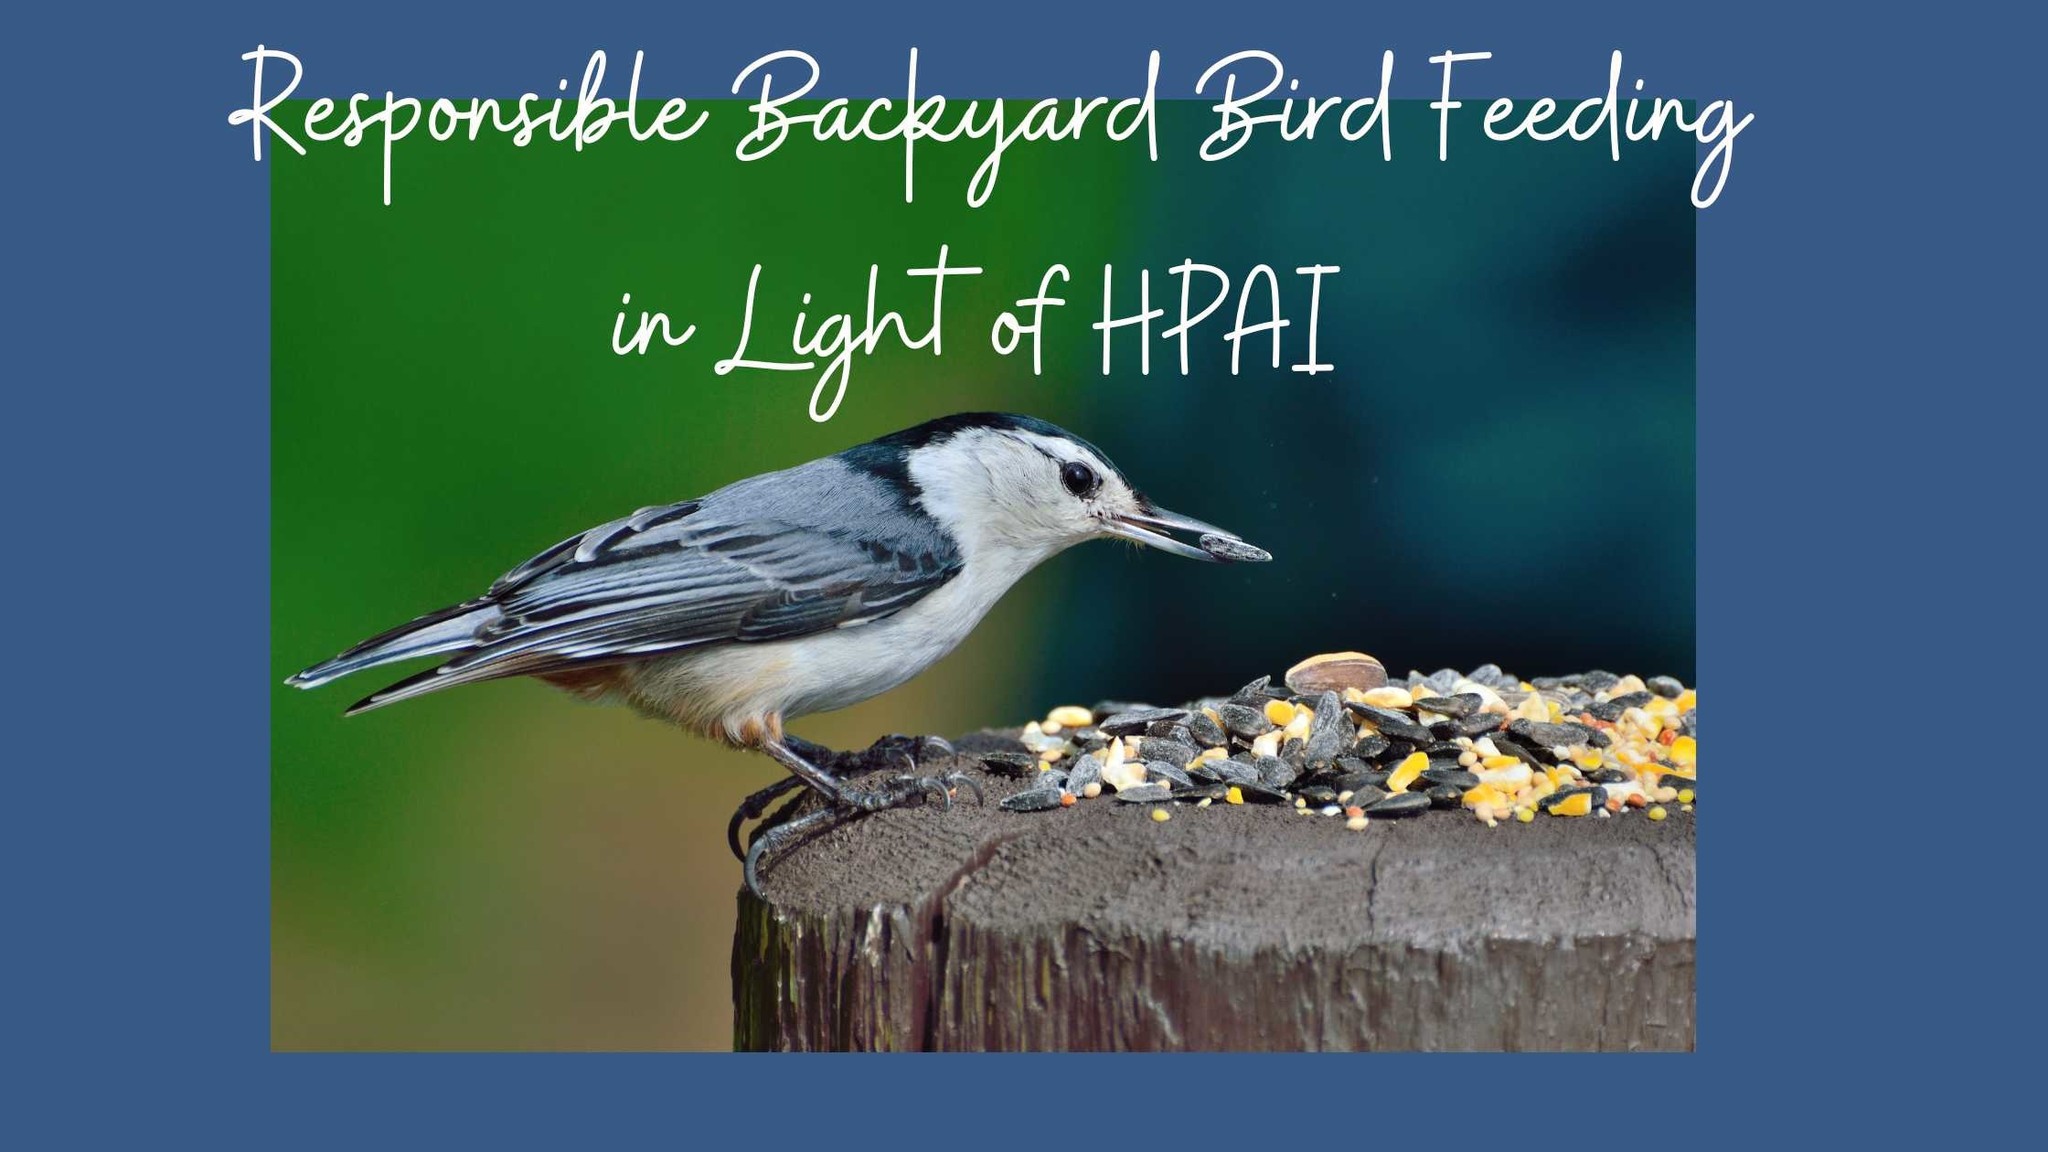 Responsible Bird Feeding during HPAI